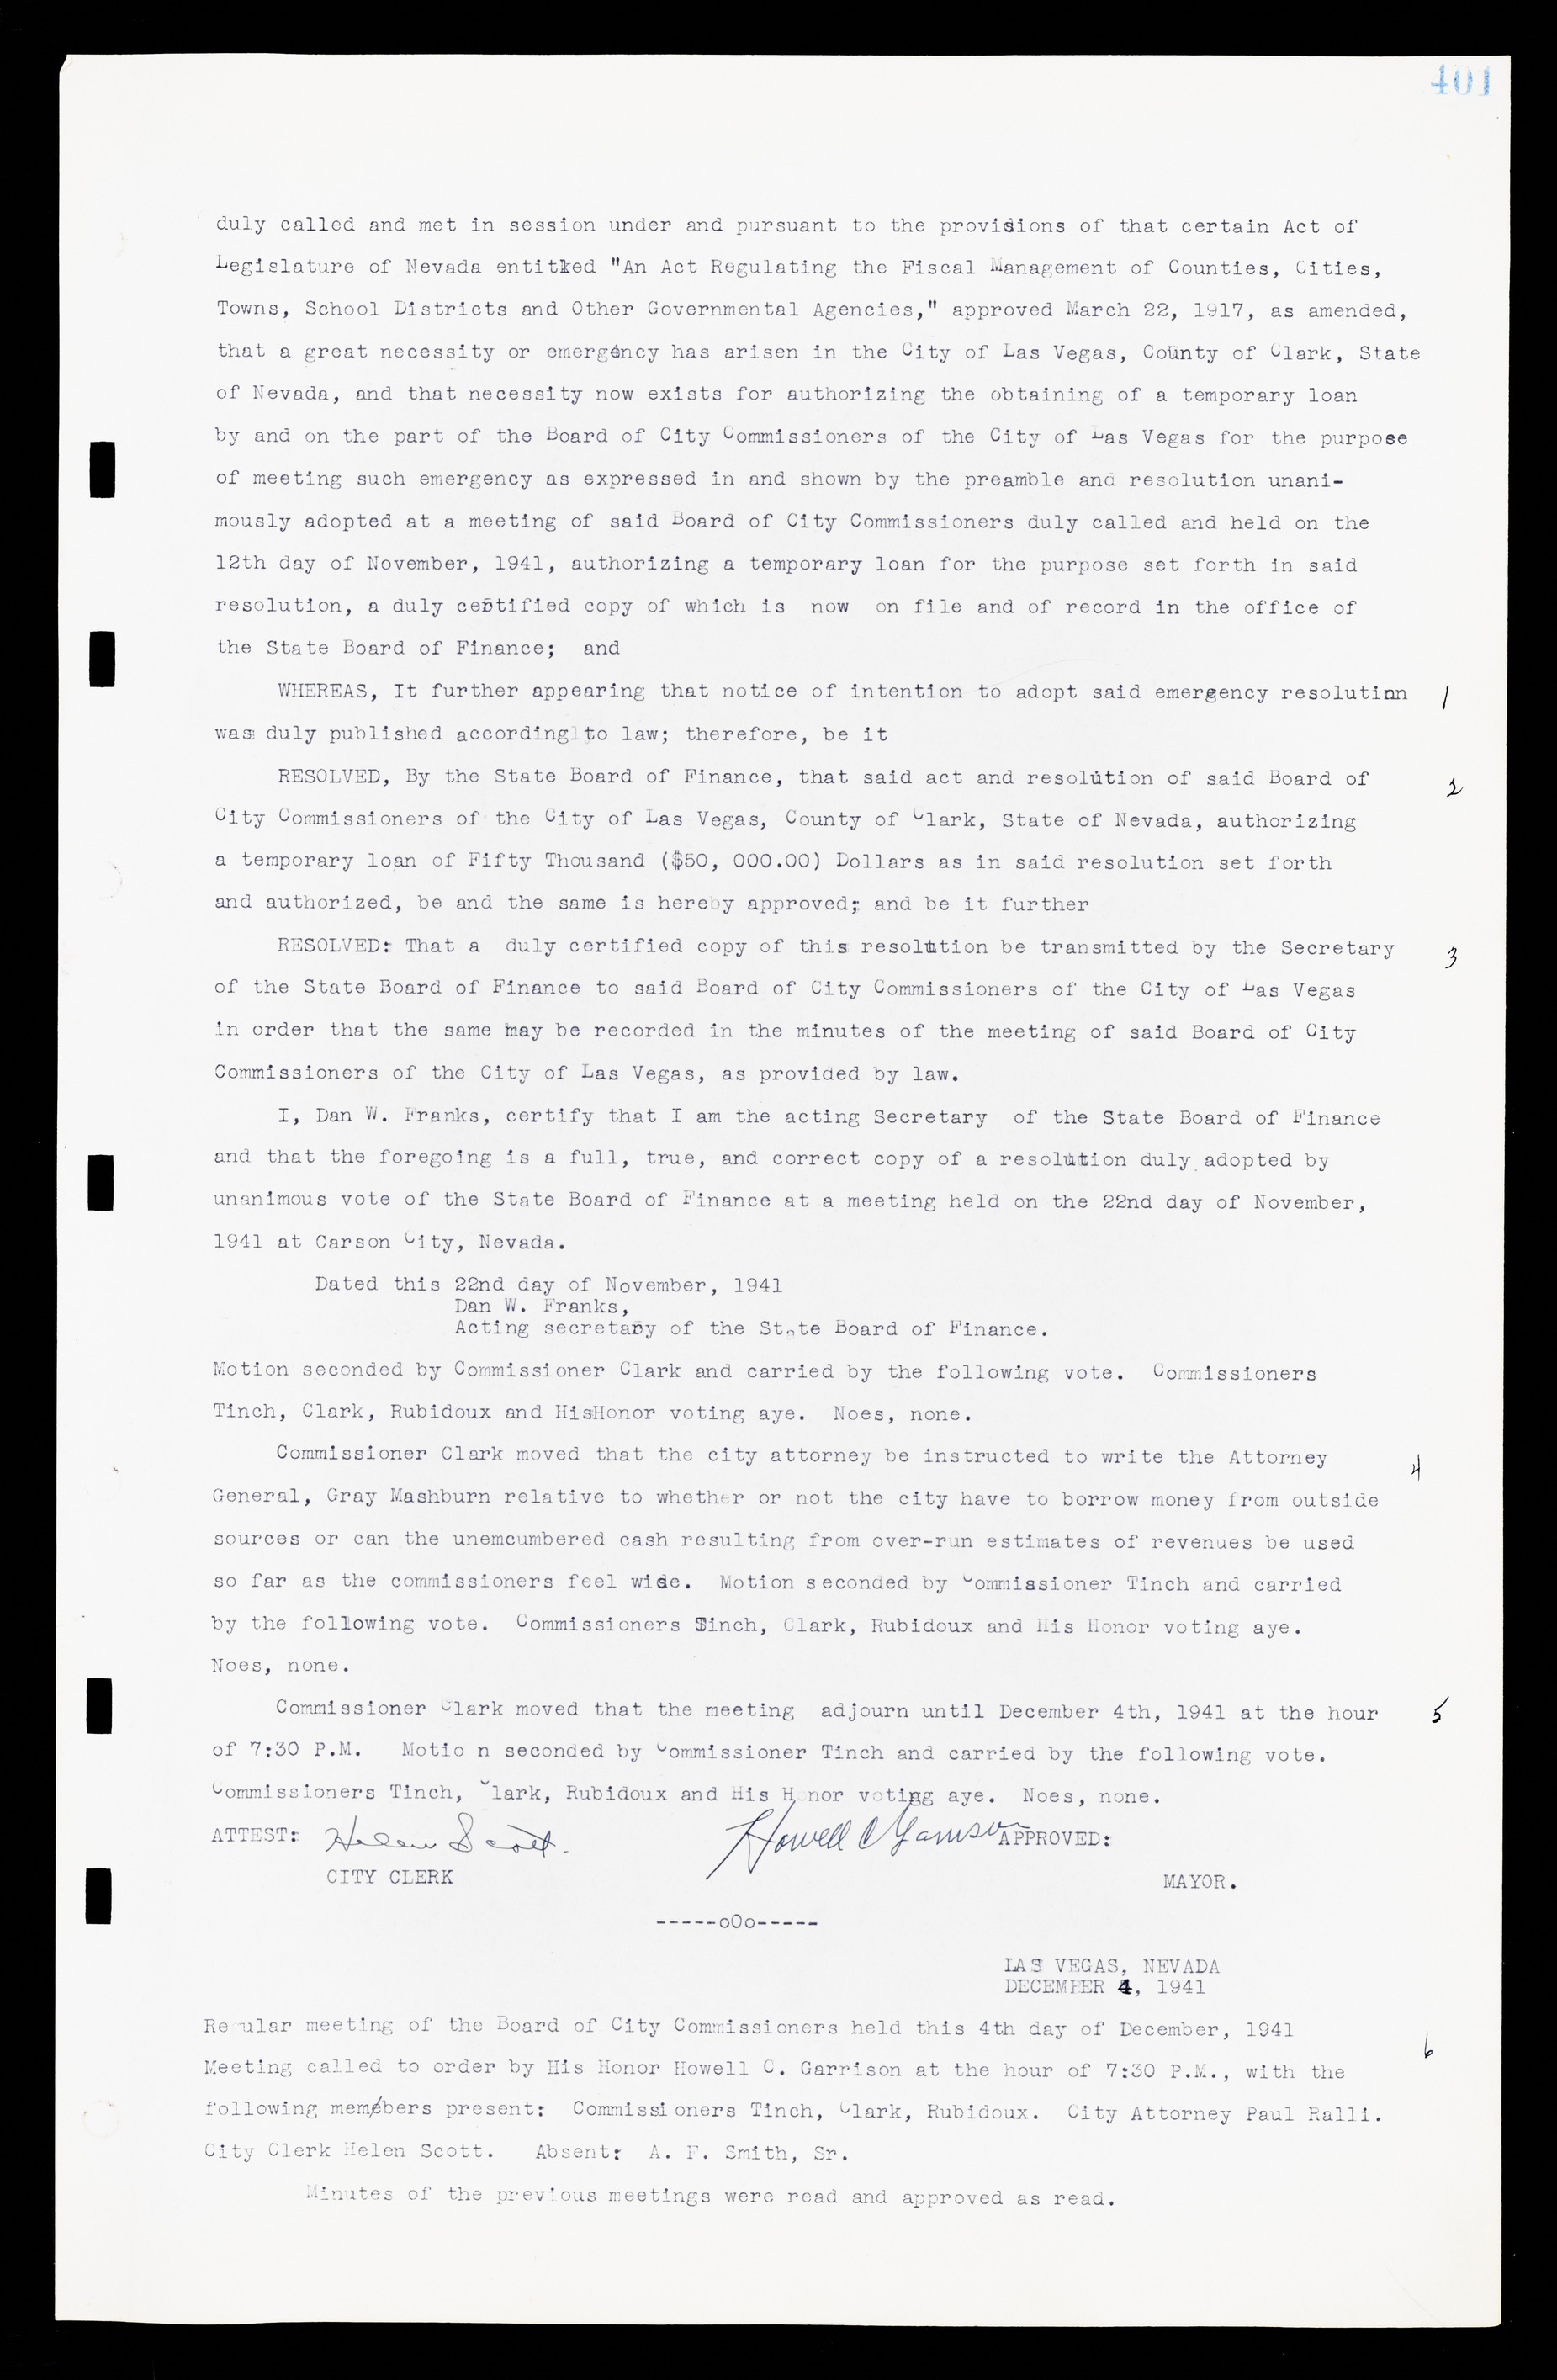 Las Vegas City Commission Minutes, February 17, 1937 to August 4, 1942, lvc000004-427